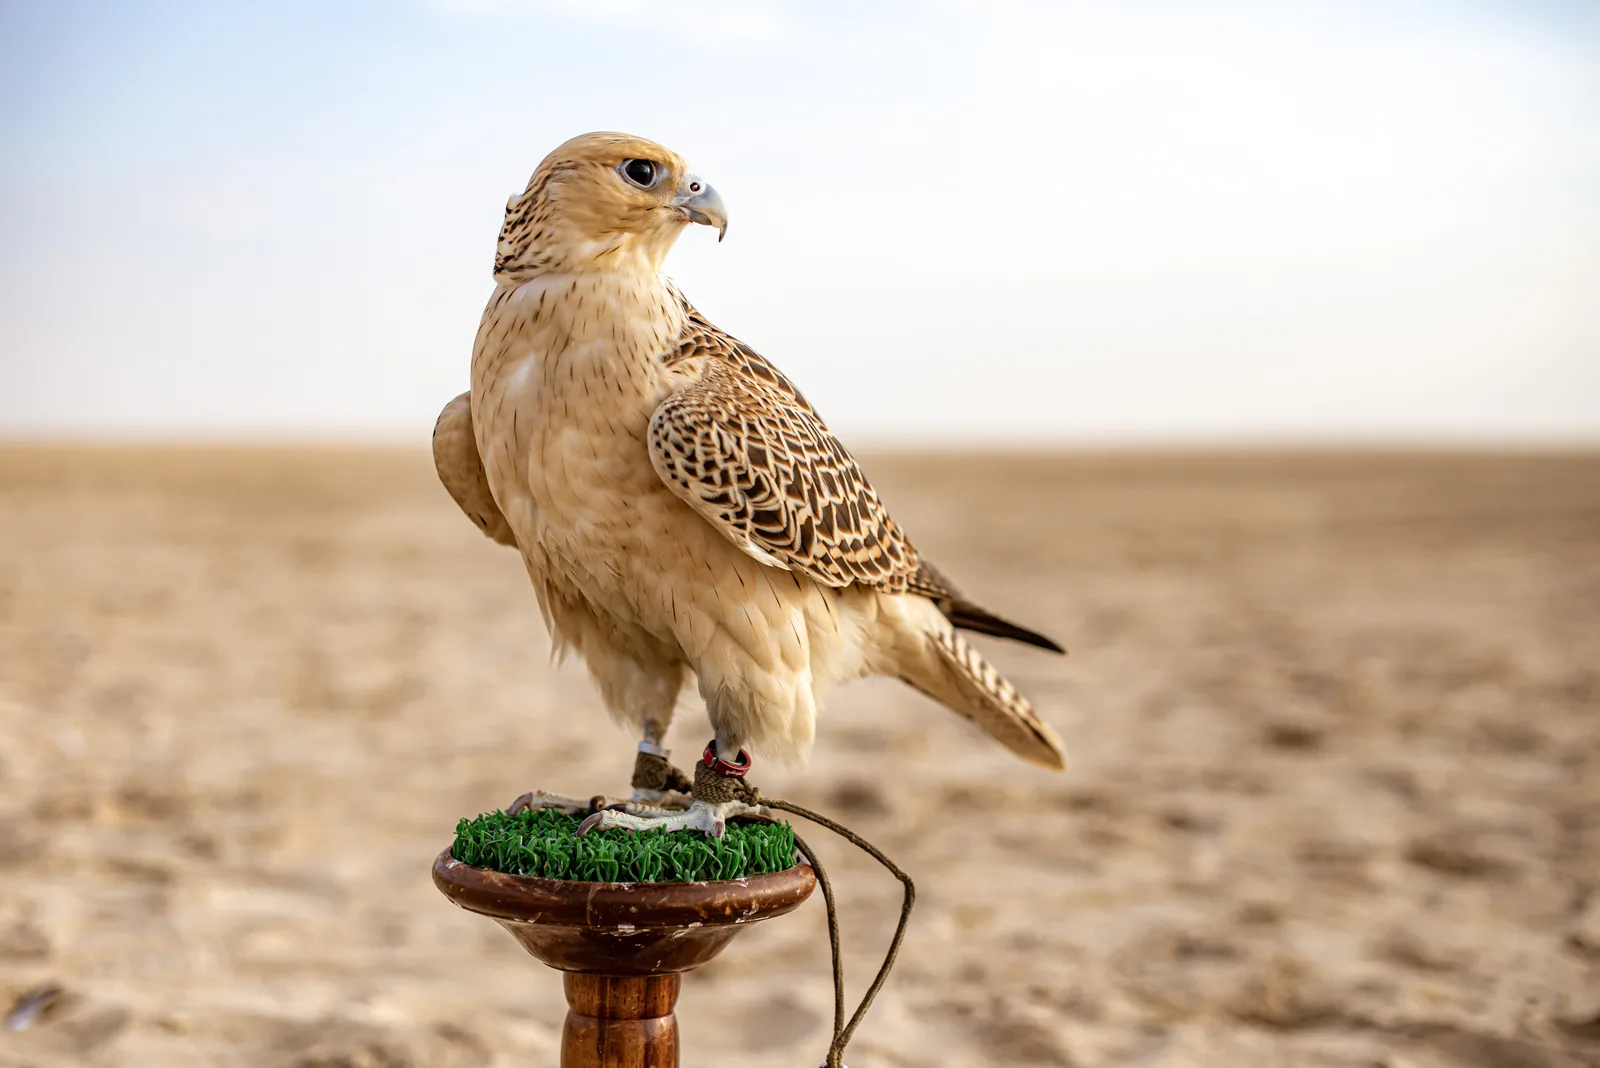 Falcon in desert looking away